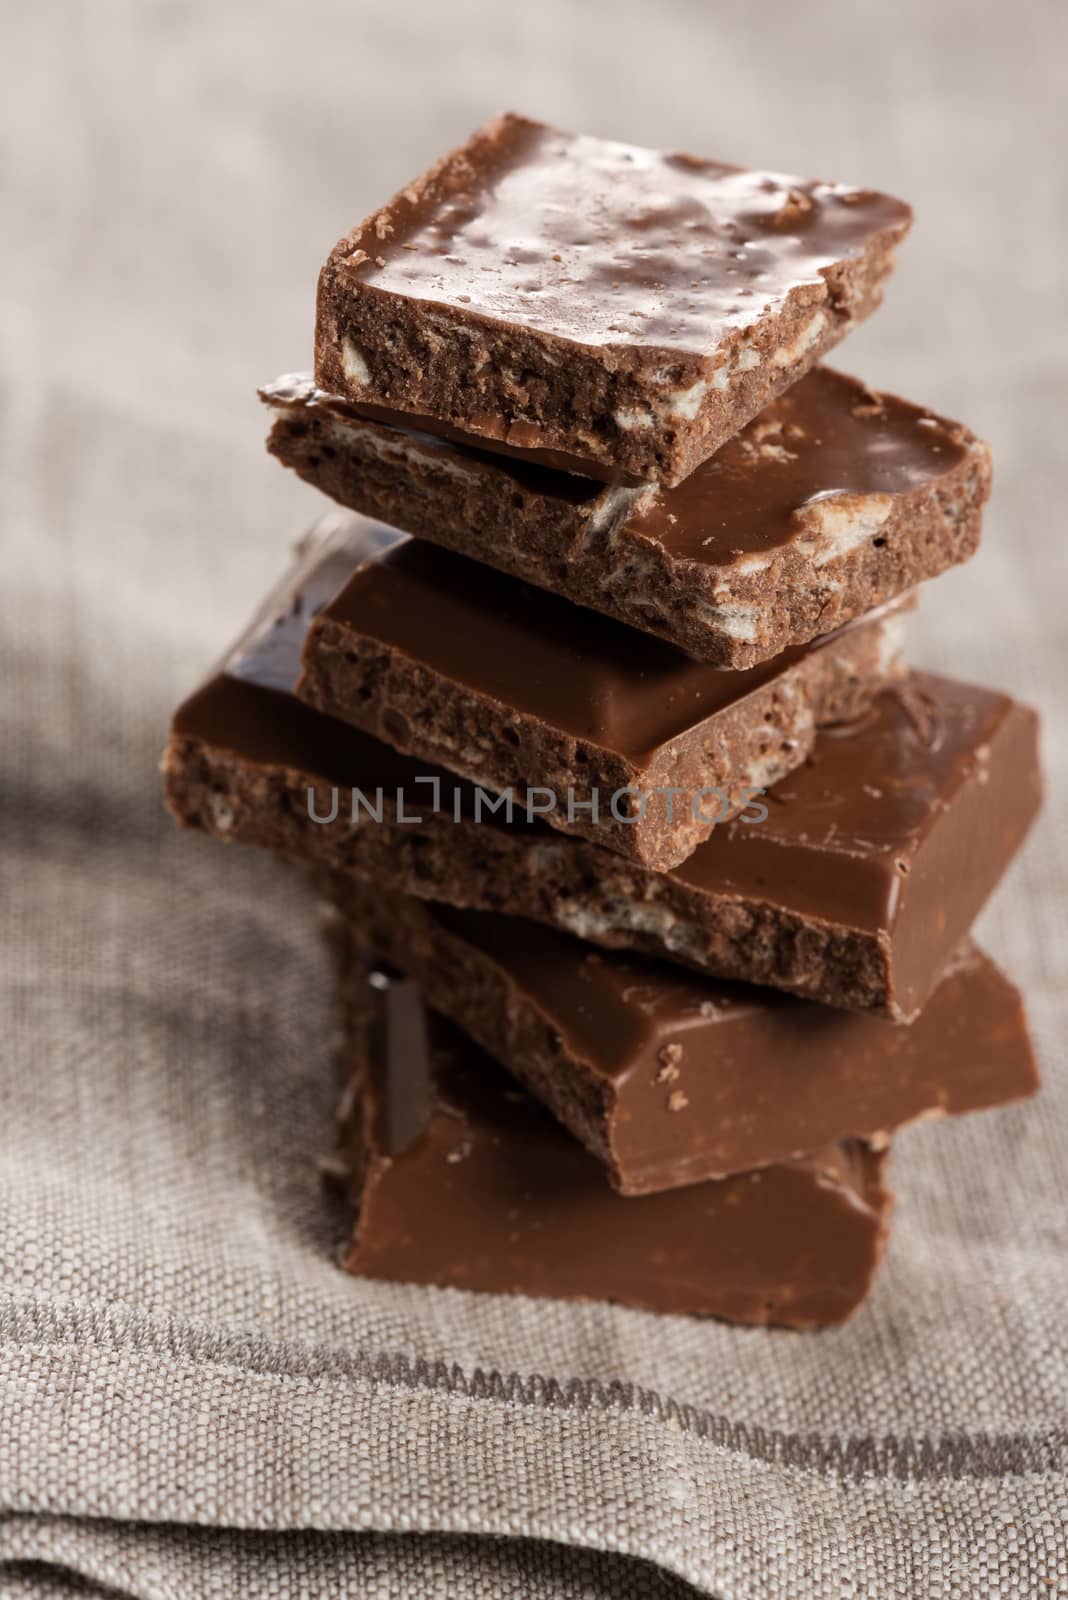 stack of chocolate up view by Nanisimova